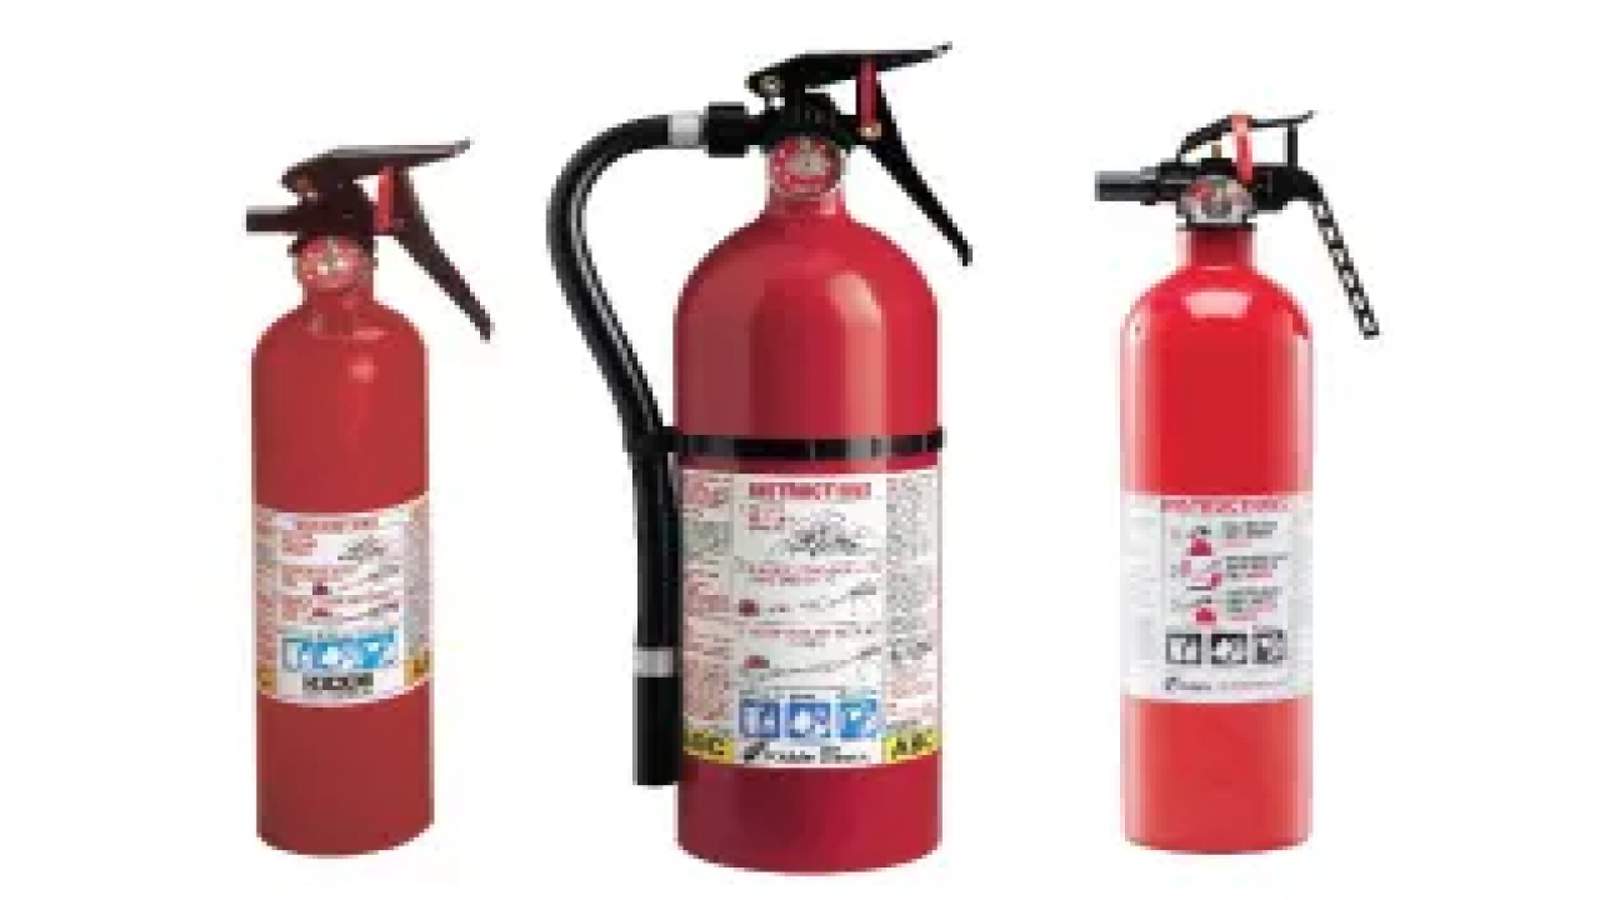 Consumer Reports: Inside Kidde’s handling of massive fire extinguisher recall